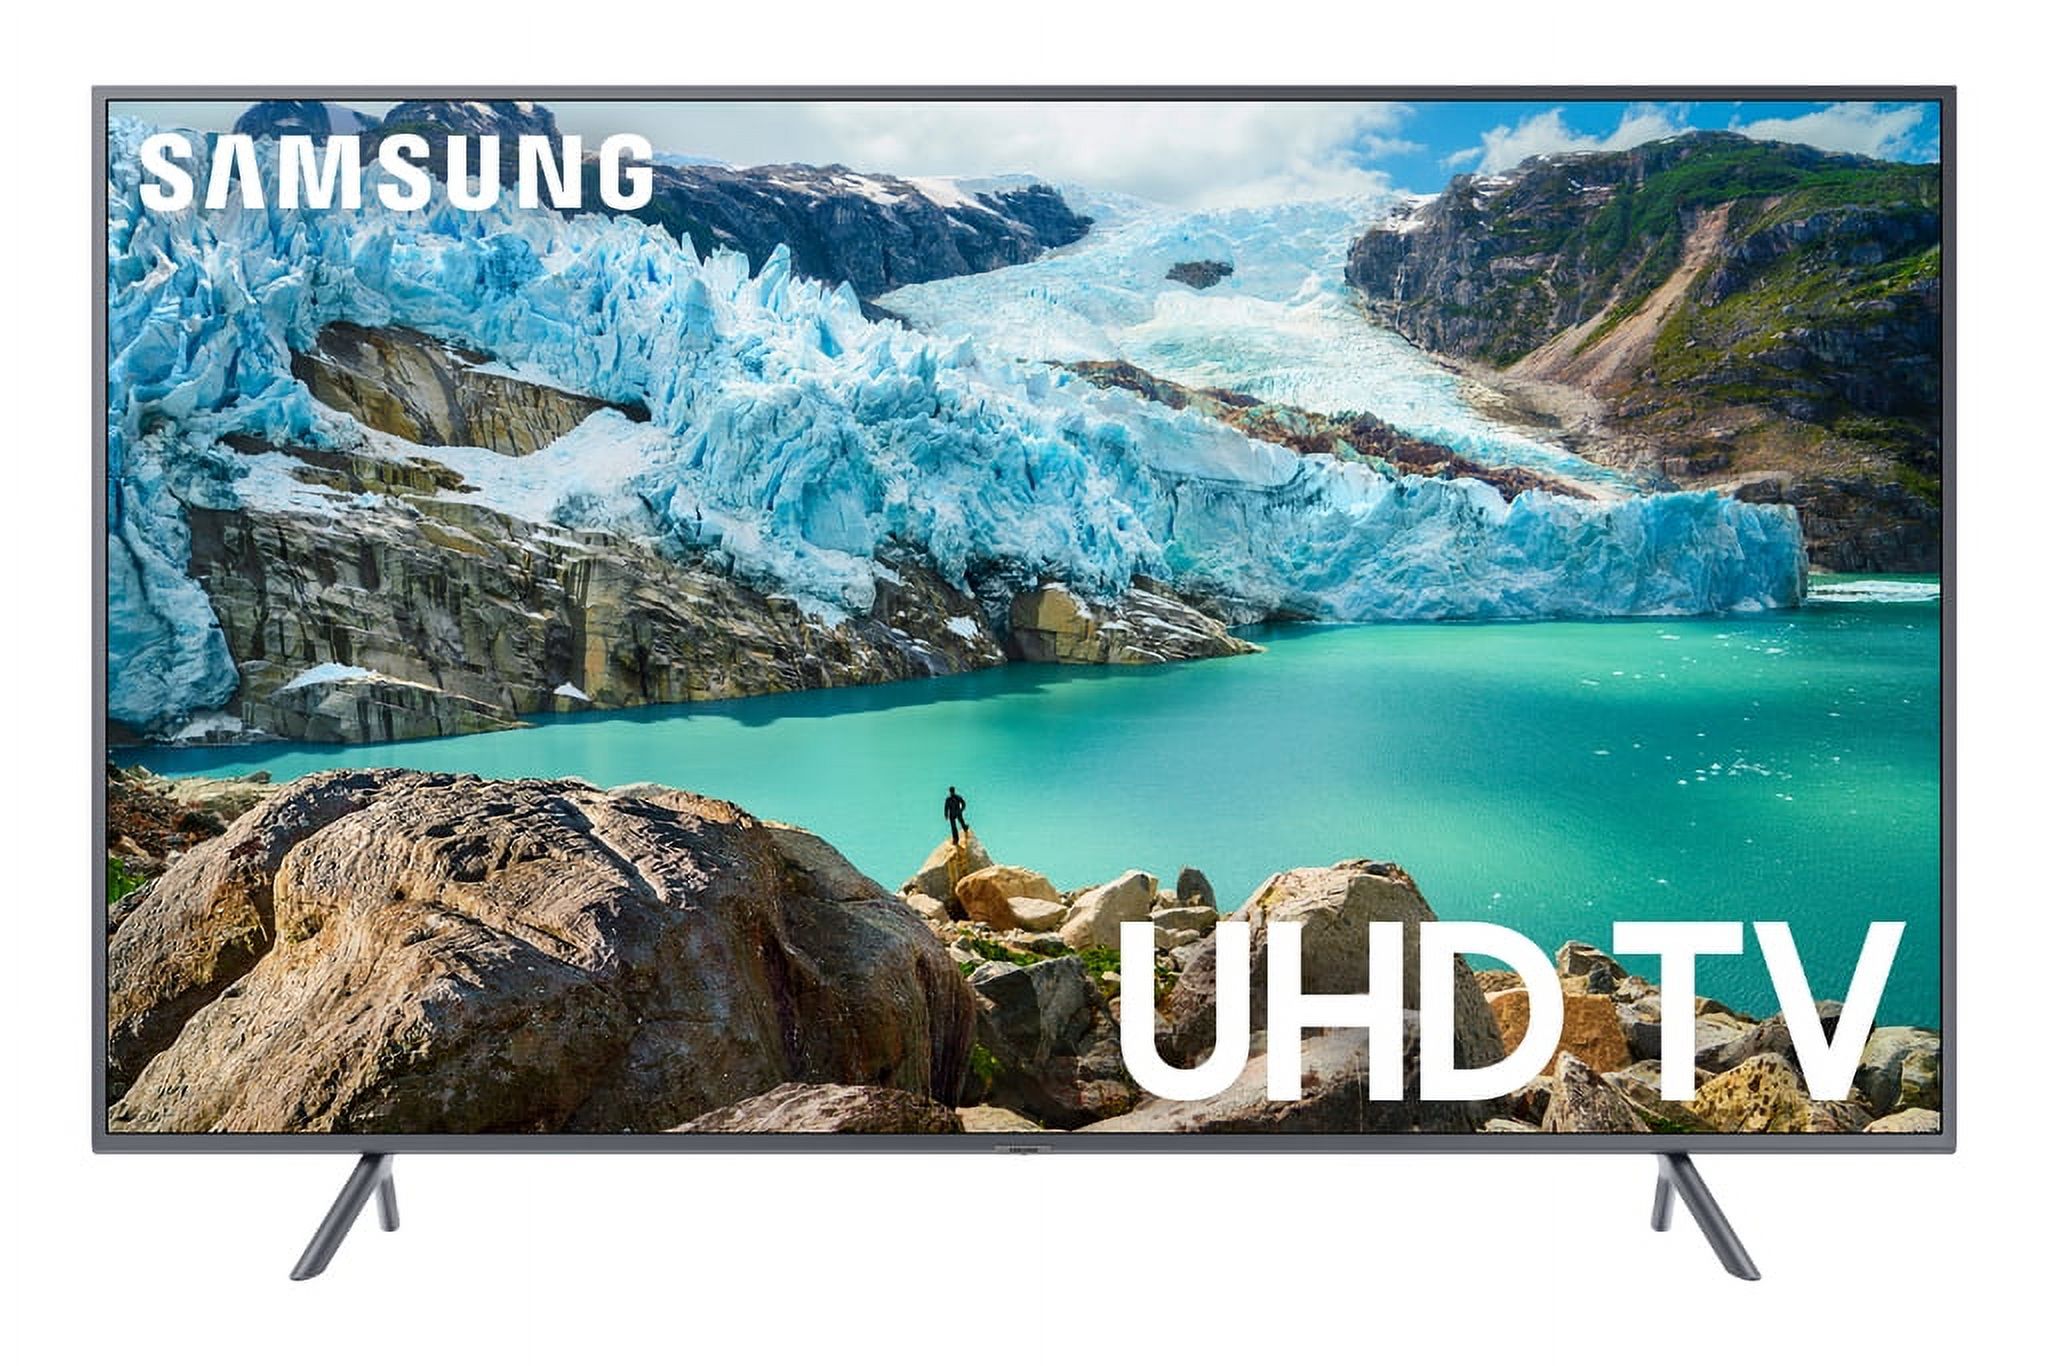 SAMSUNG 50" Class 4K Ultra HD (2160P) HDR Smart LED TV UN50RU7200 (2019 Model) - image 1 of 8